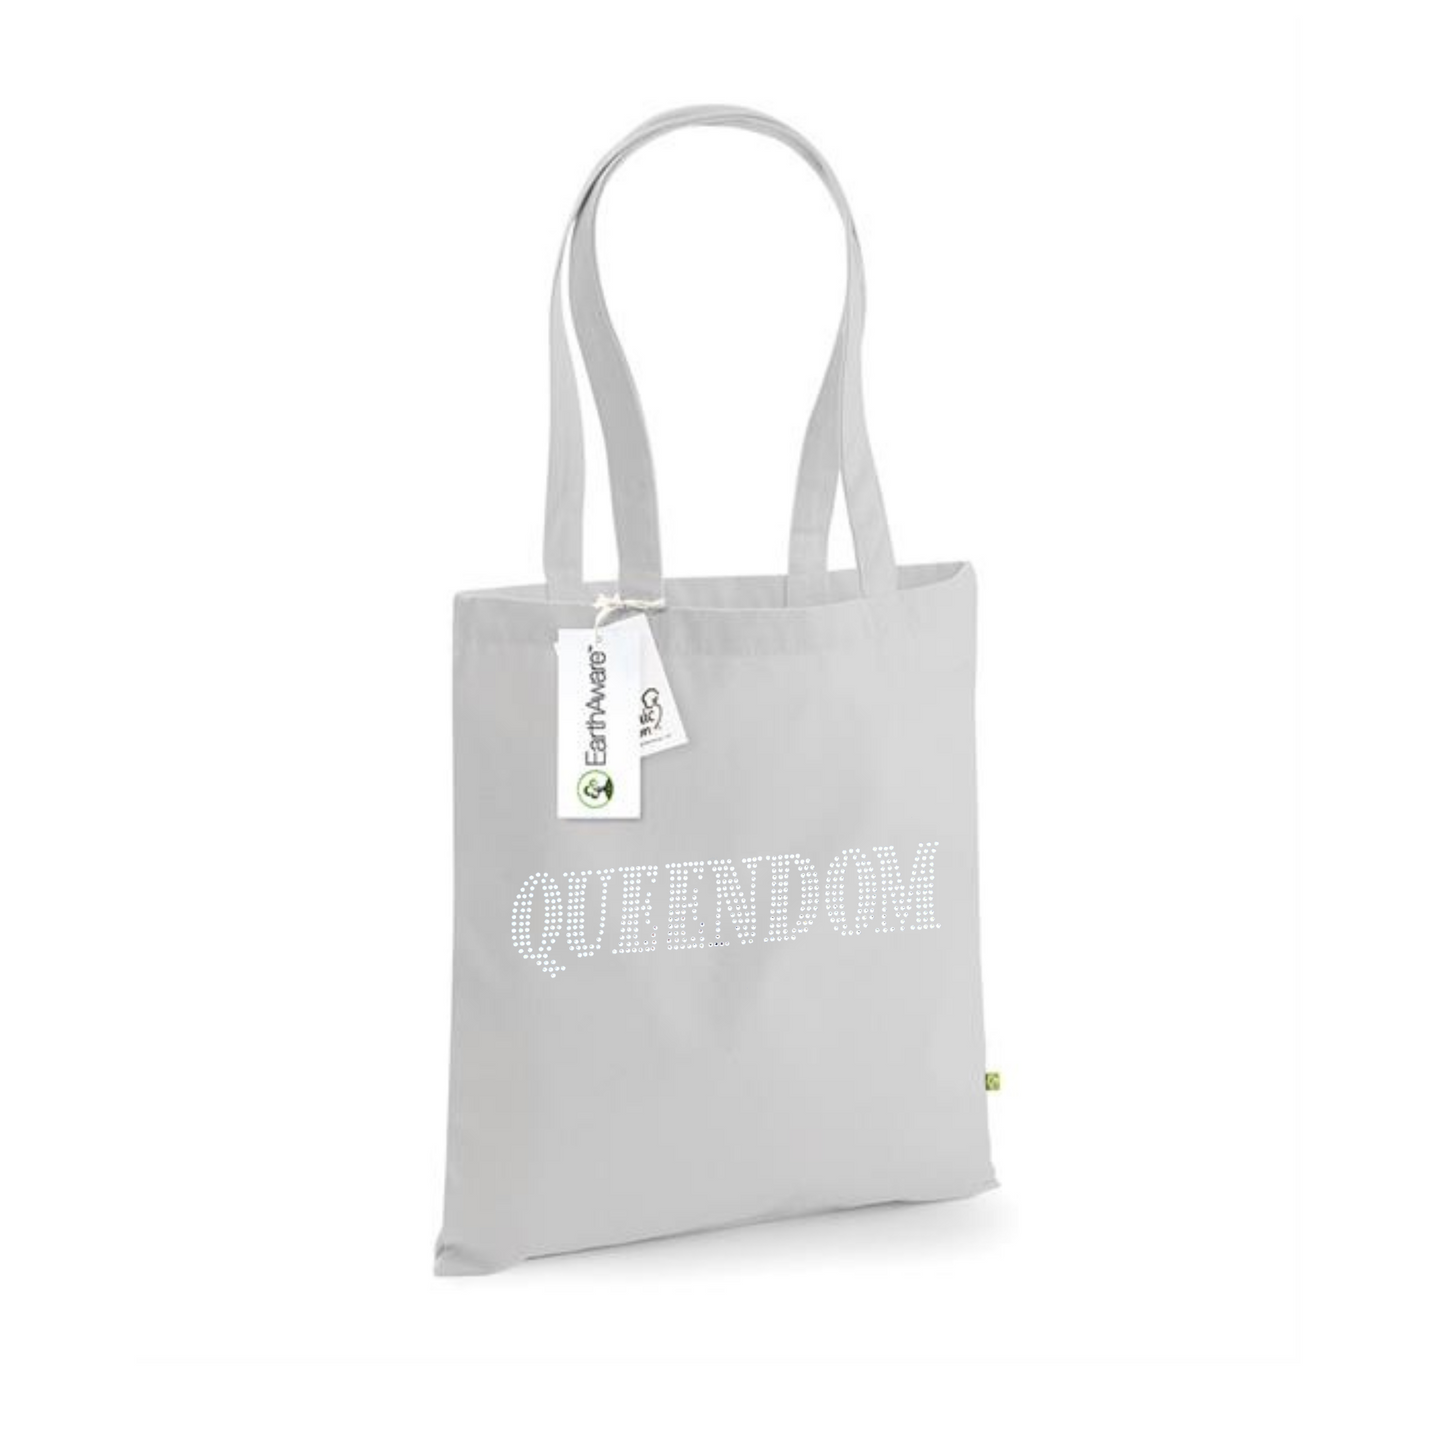 Six the musical Queendom Tote Bag